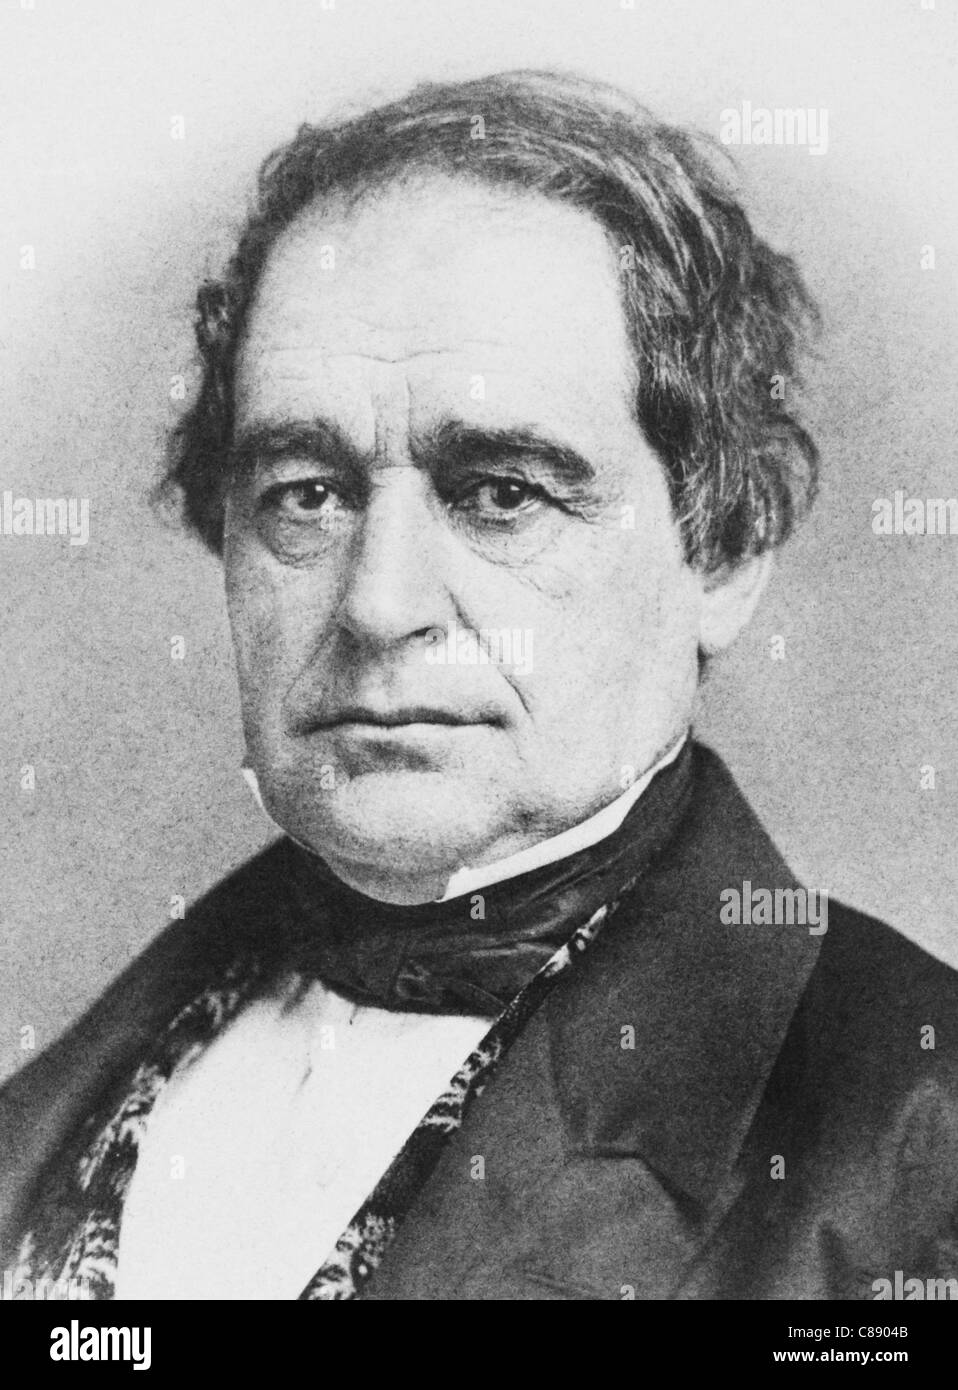 Vintage portrait photo of Hannibal Hamlin (1809 - 1891) - the 15th US Vice President (1861 - 1865). Stock Photo